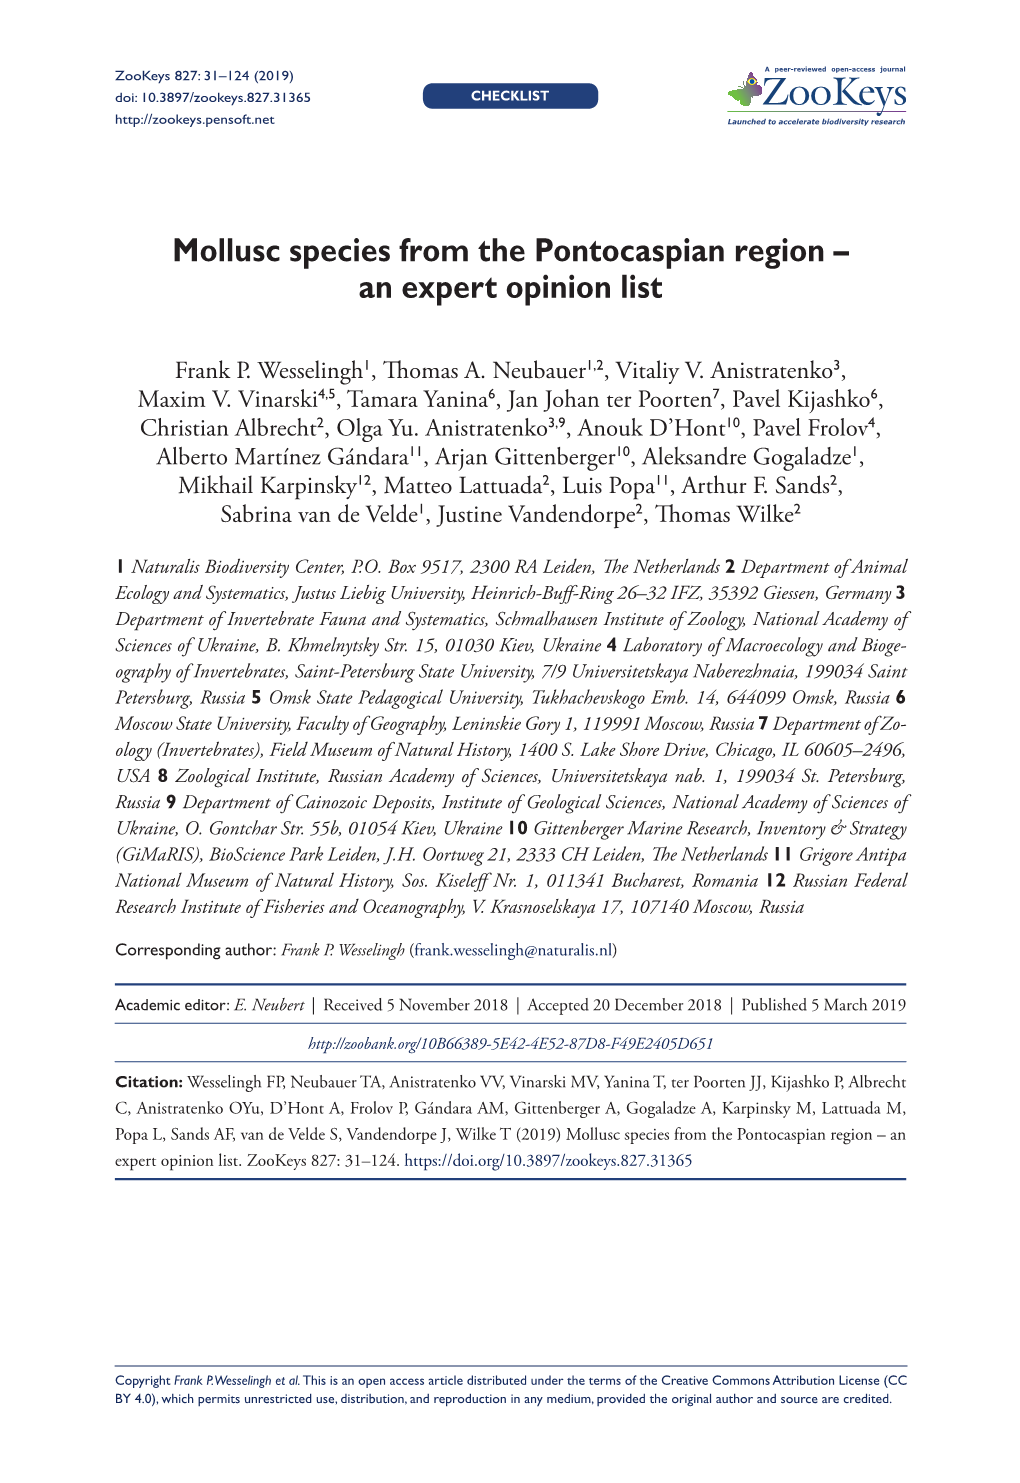 Mollusc Species from the Pontocaspian Region – an Expert Opinion List